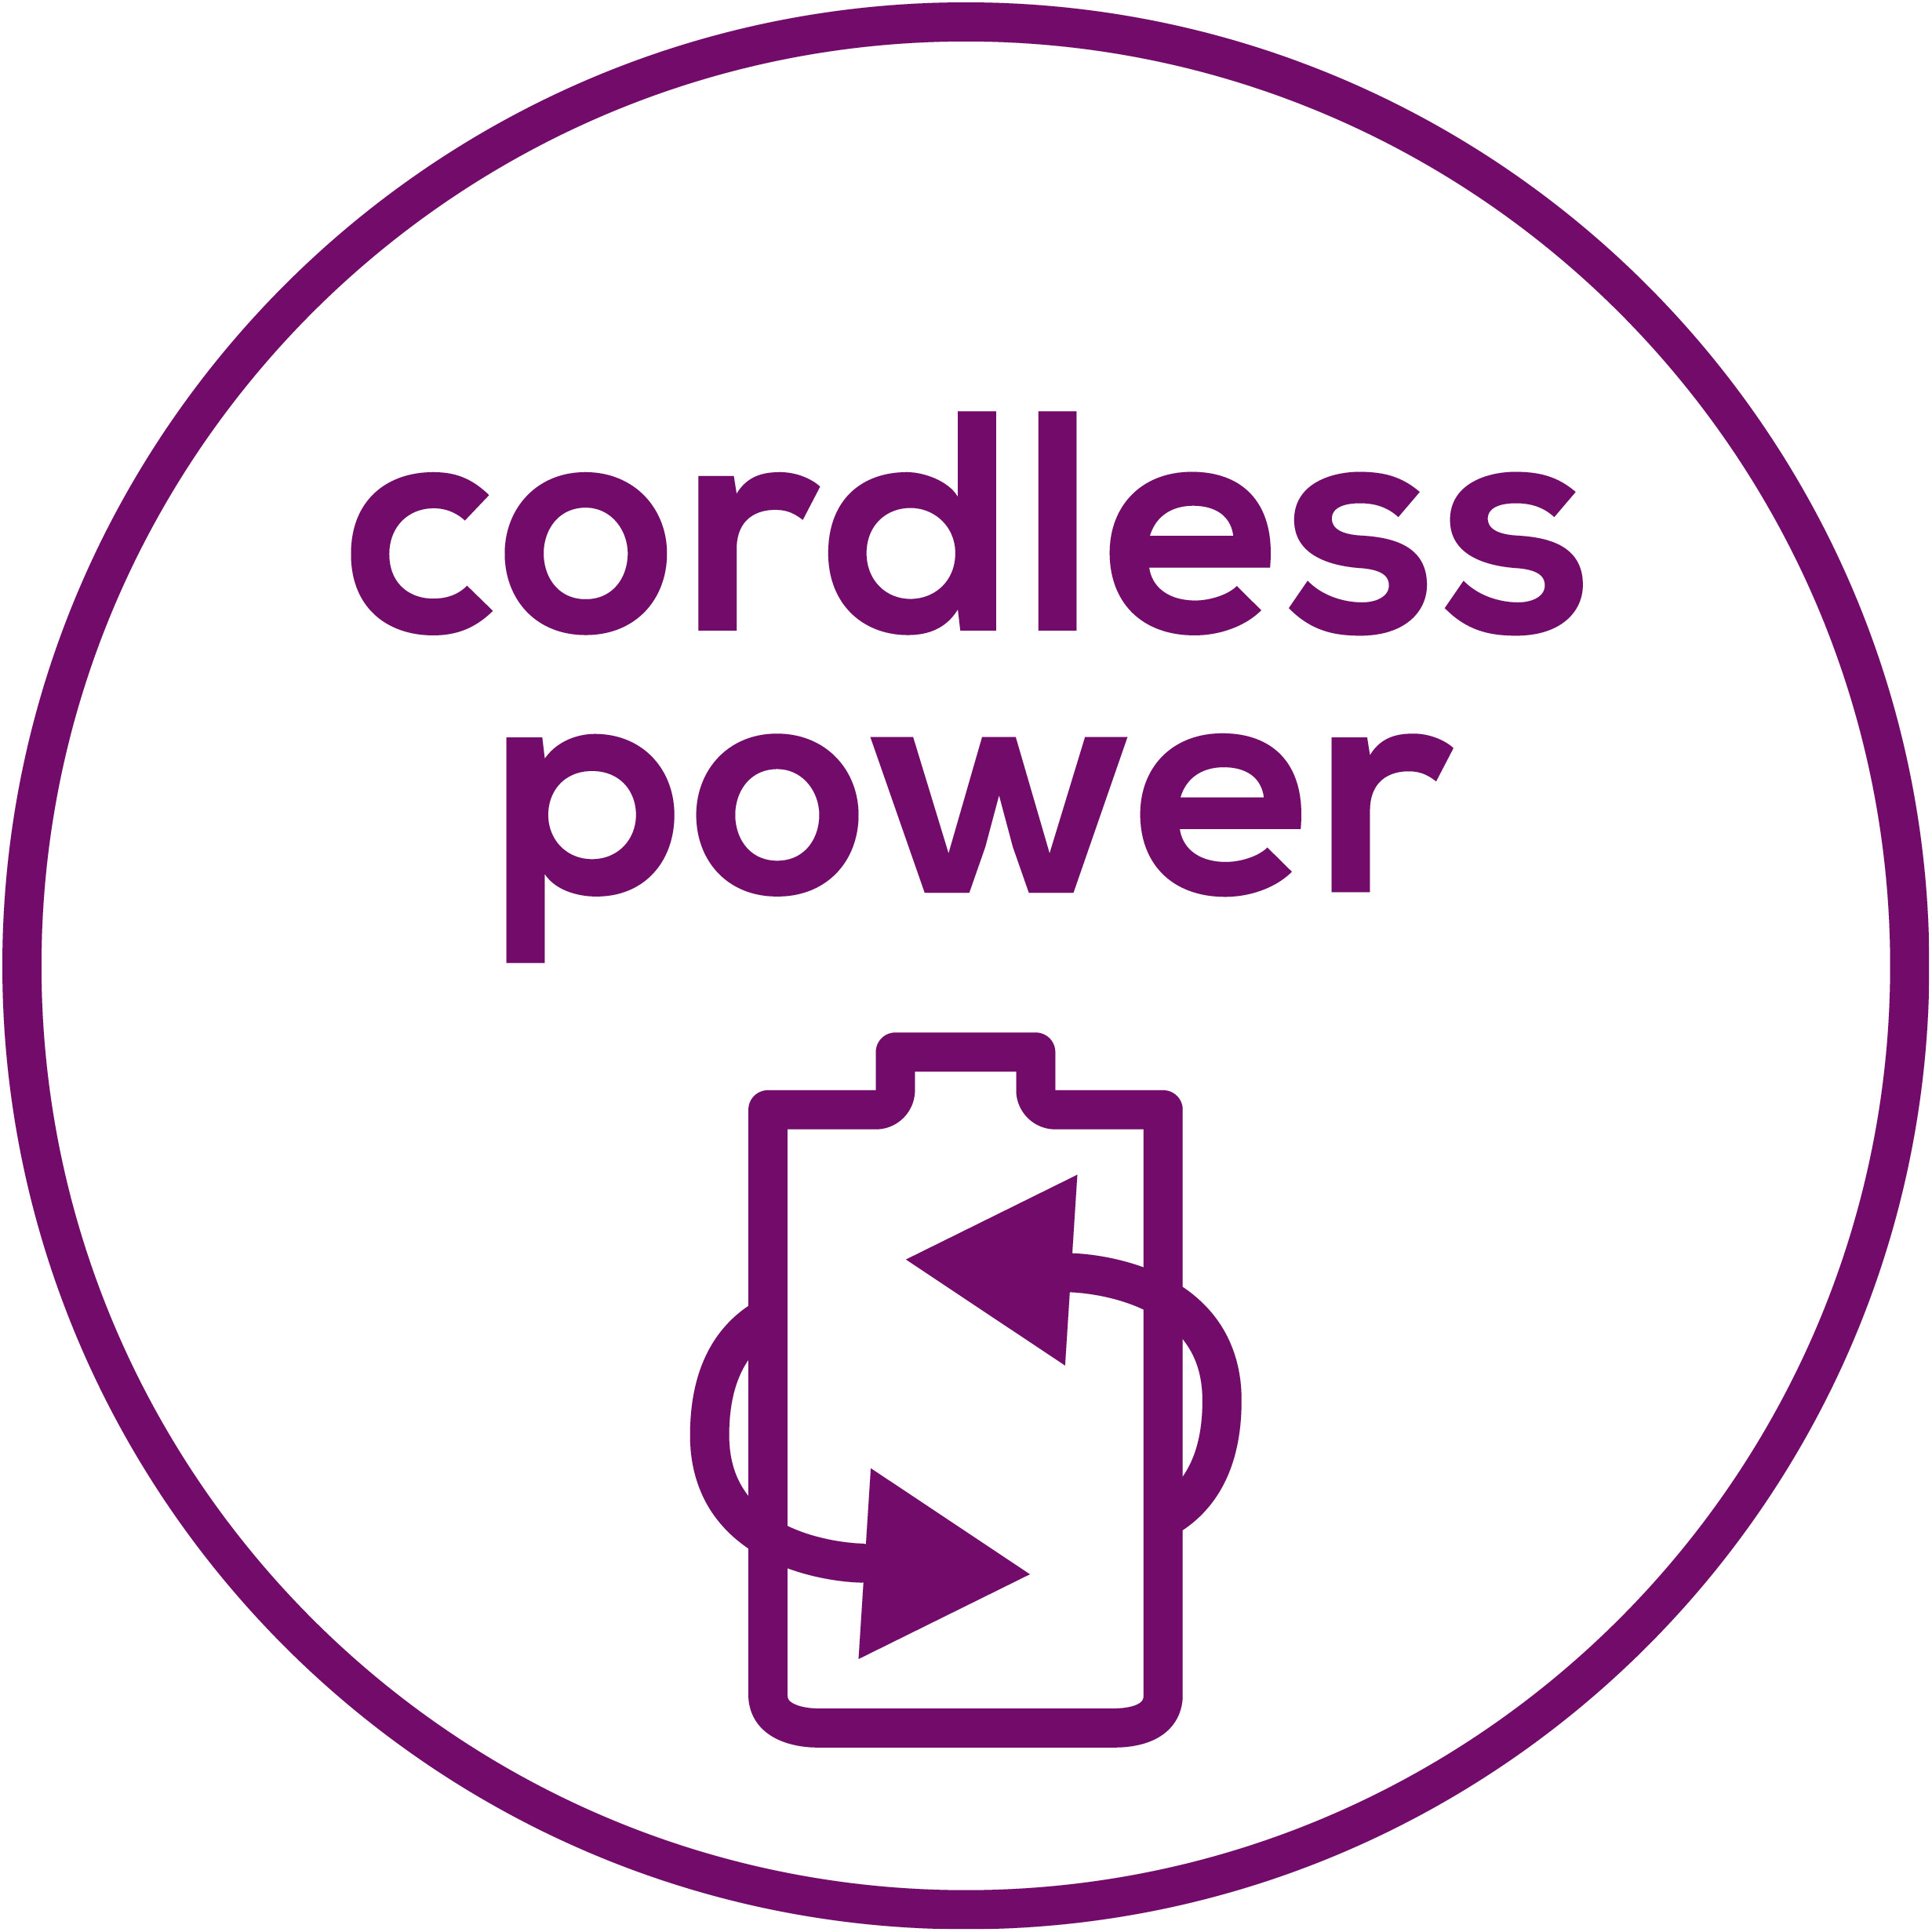 Cordless power